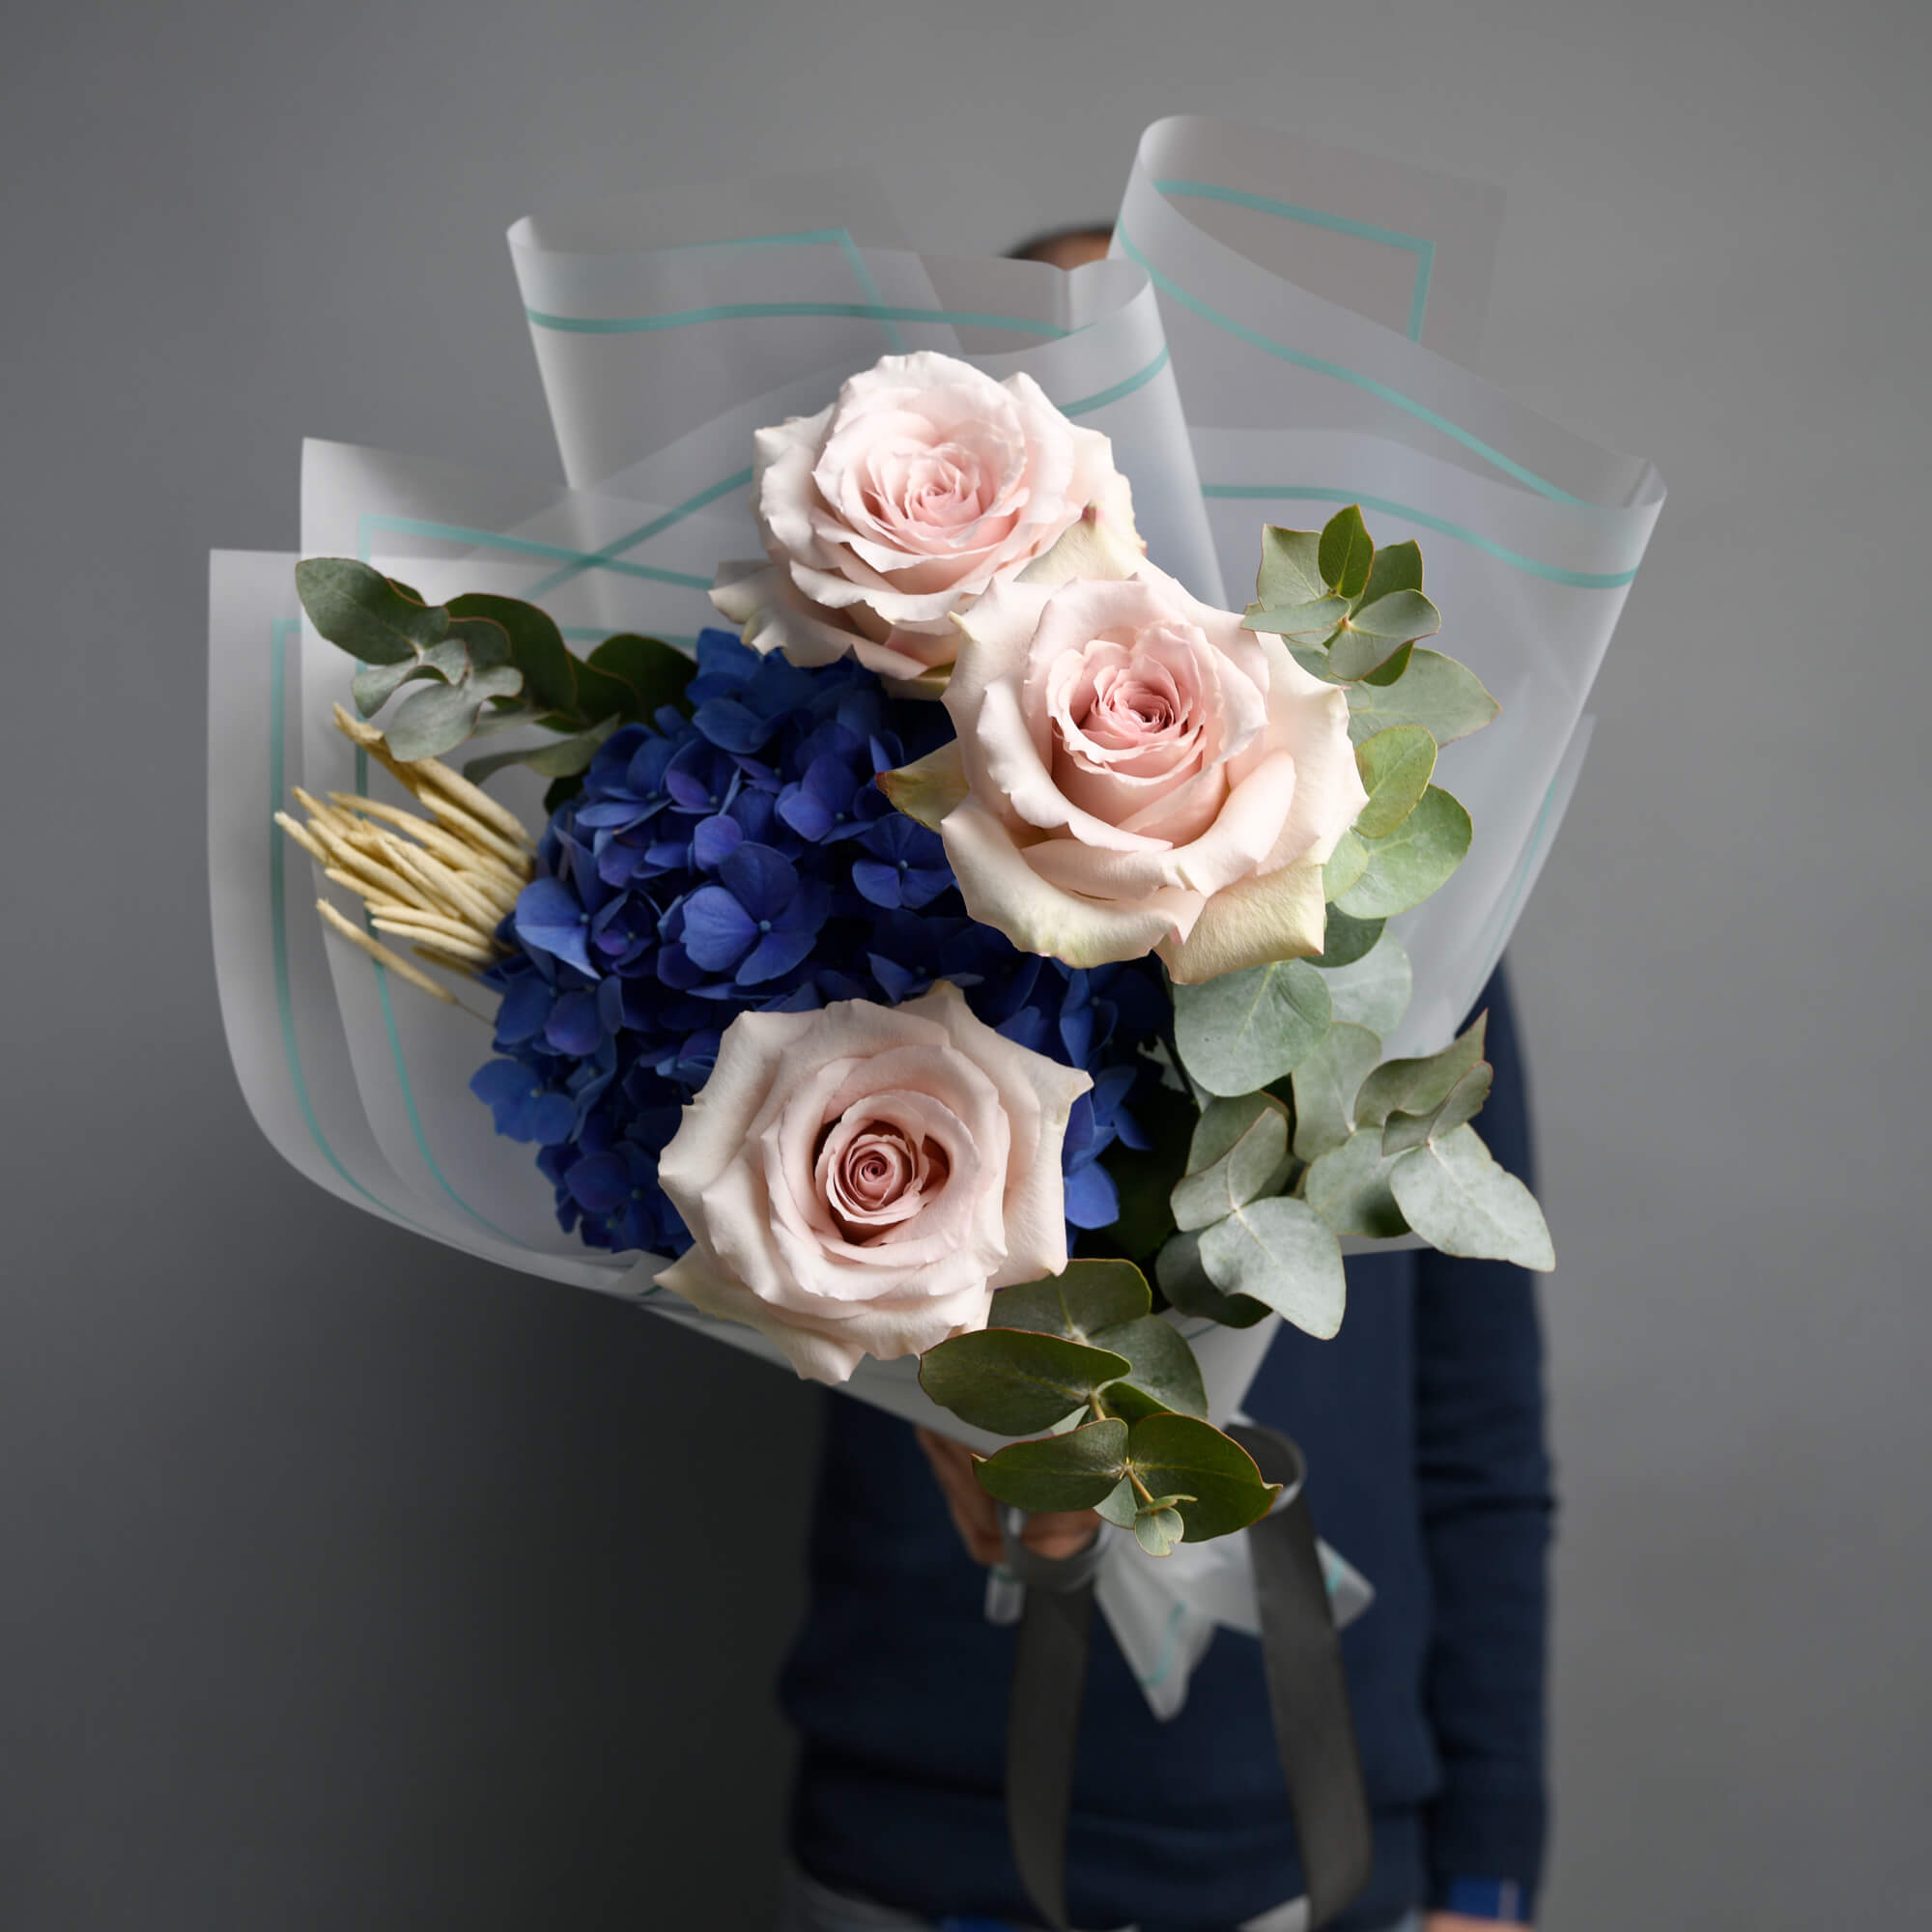 Buchet cu trandafiri speciali si hortensie albastra